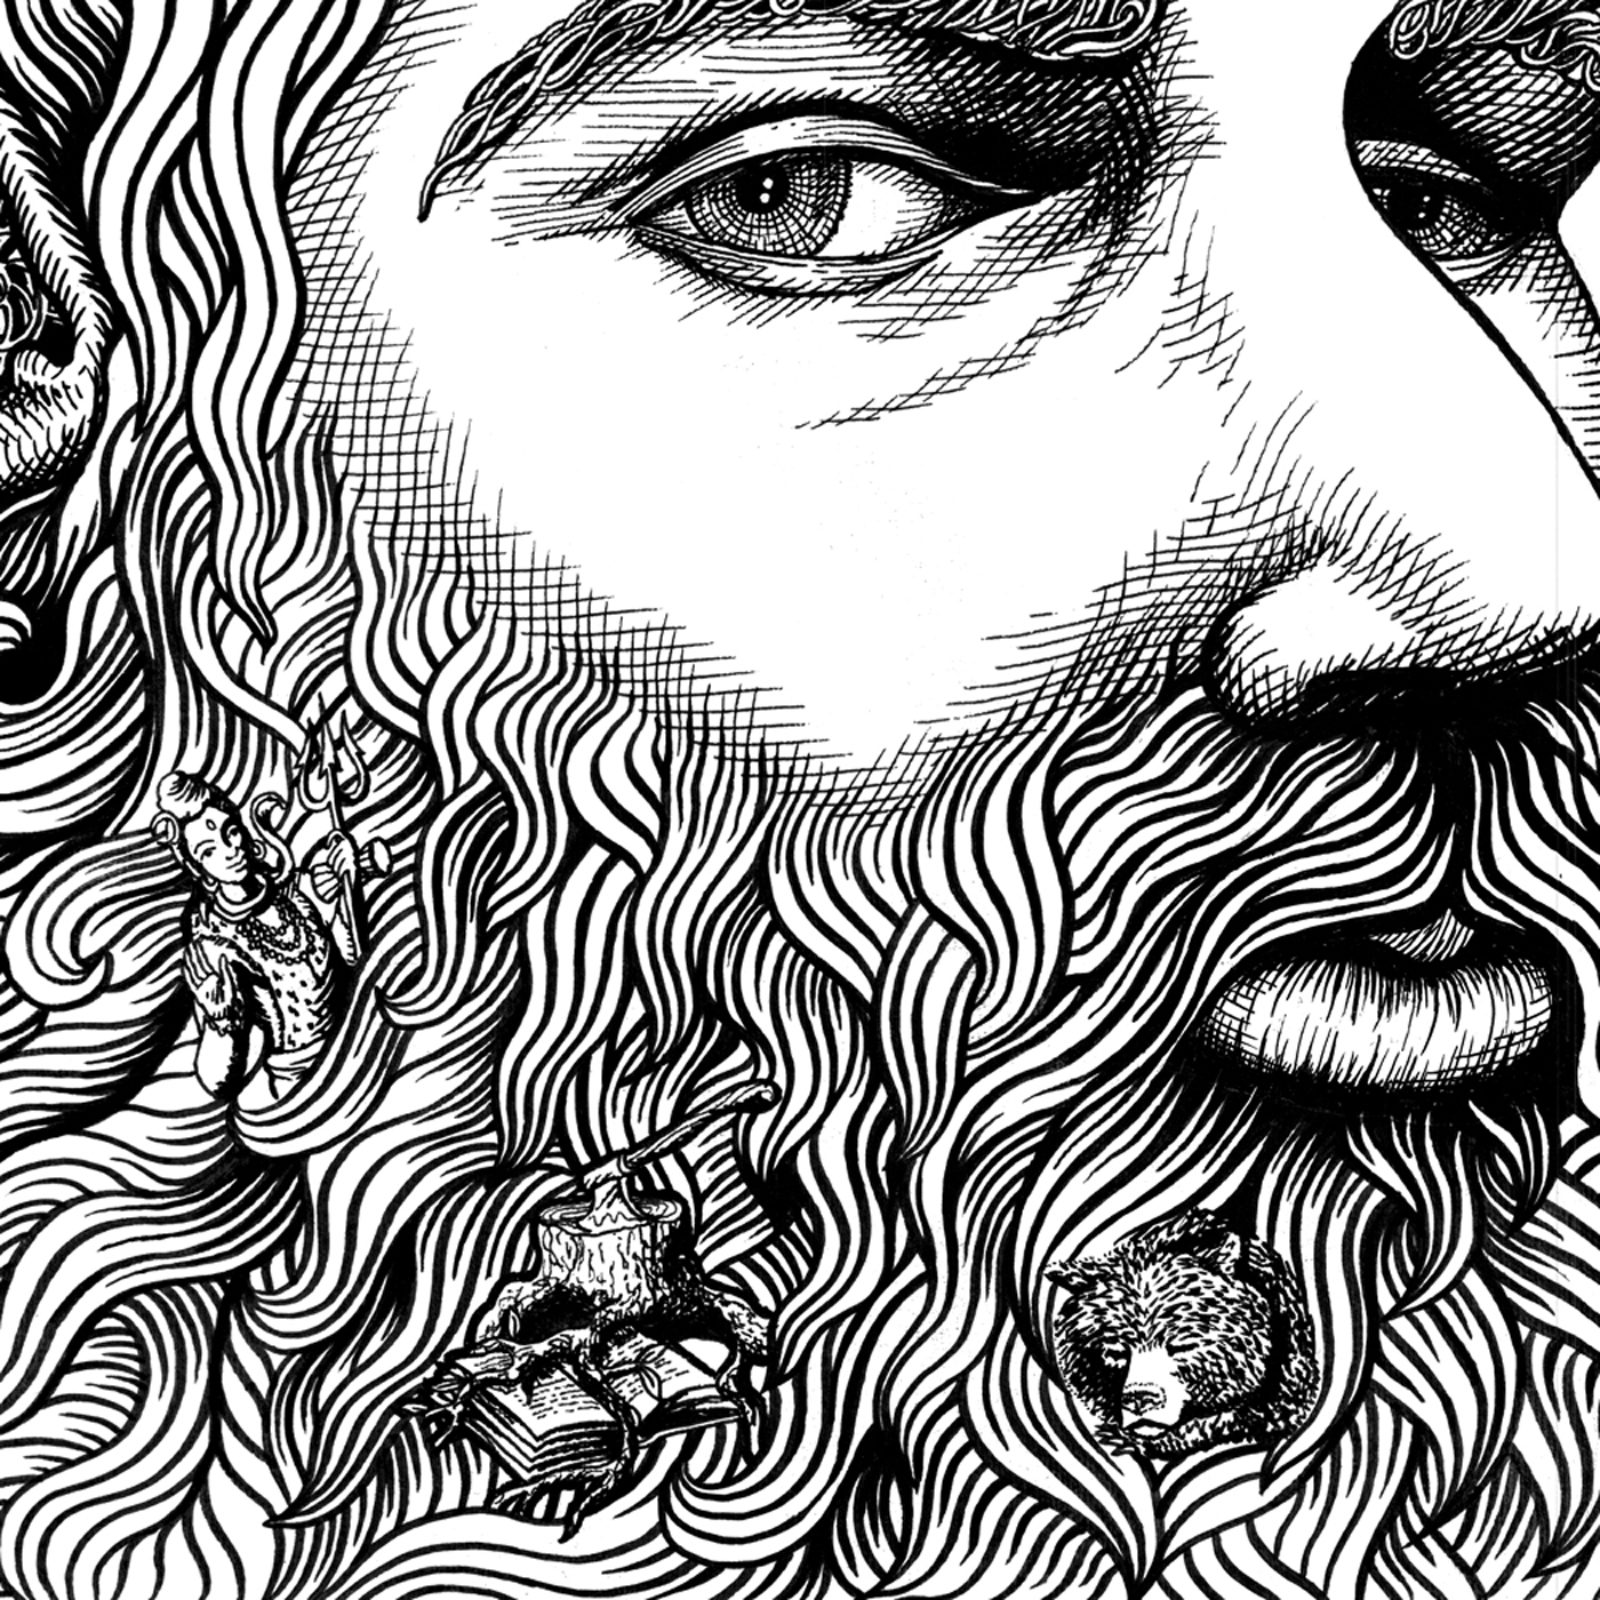 The Beards – Official Website